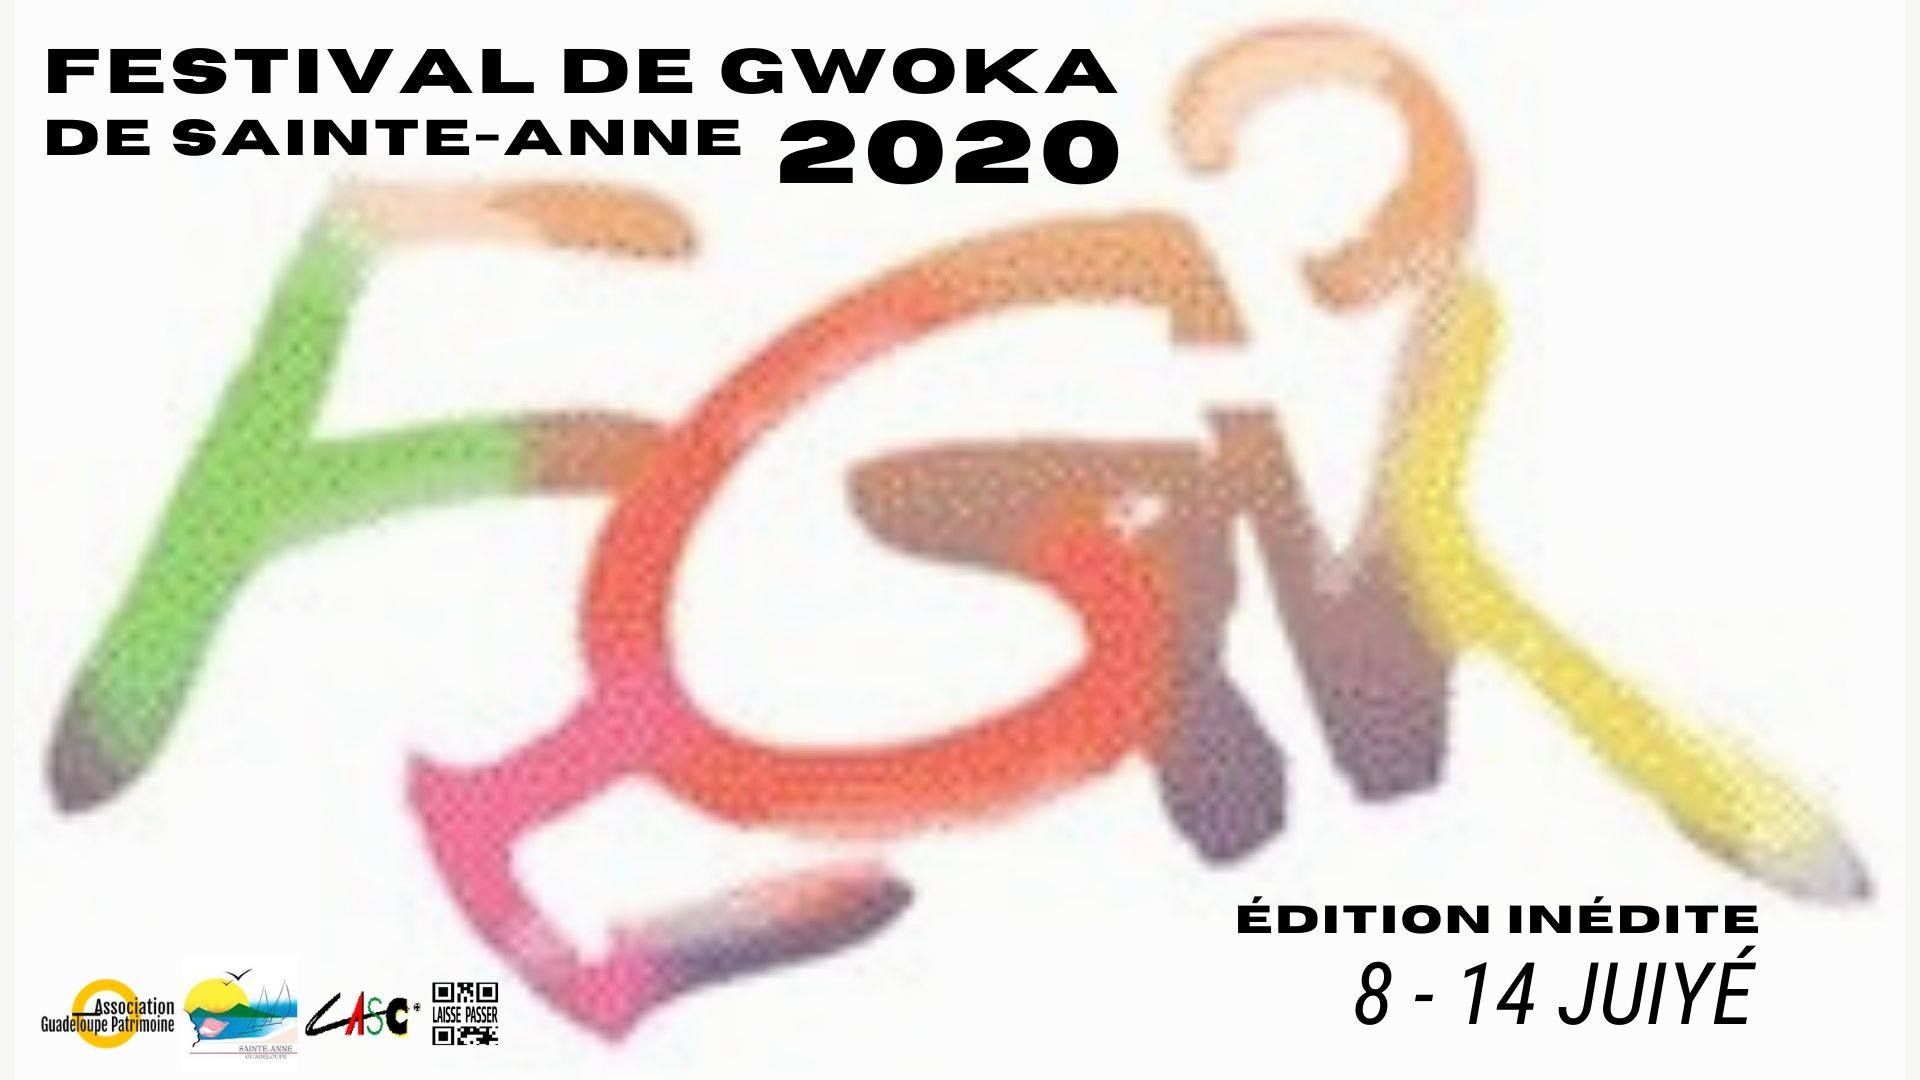 Festival de Gwoka de Sainte-Anne 2020 – Edition inédite